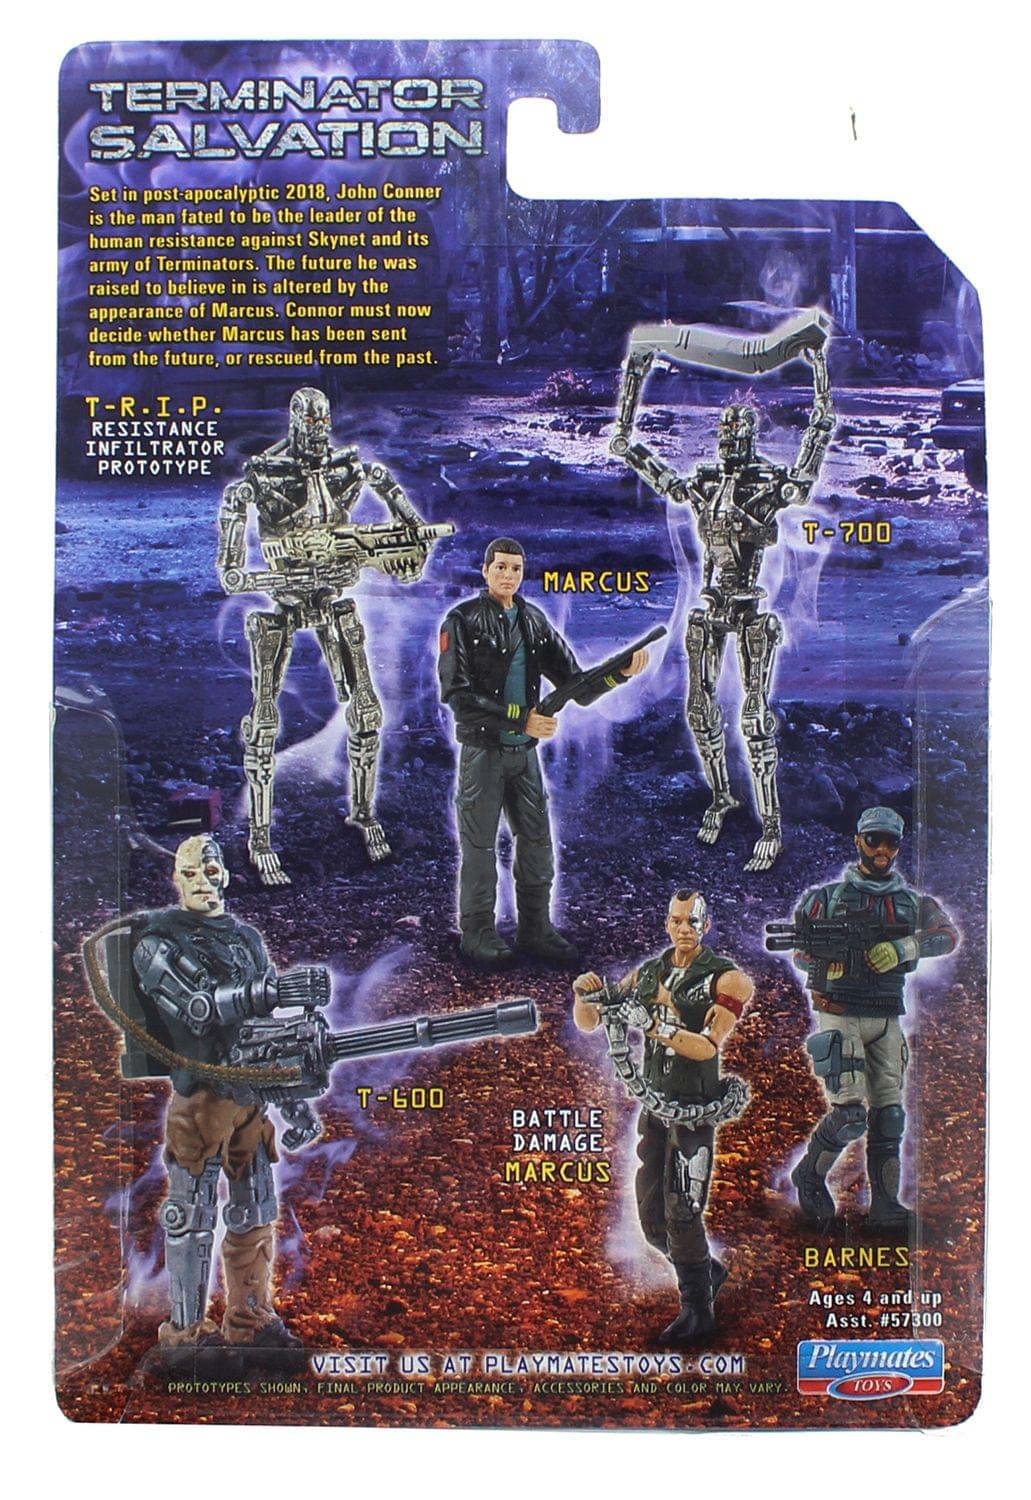 Terminator Salvation 3.75 Inch Action Figure - T-R.I.P. Endoskeleton